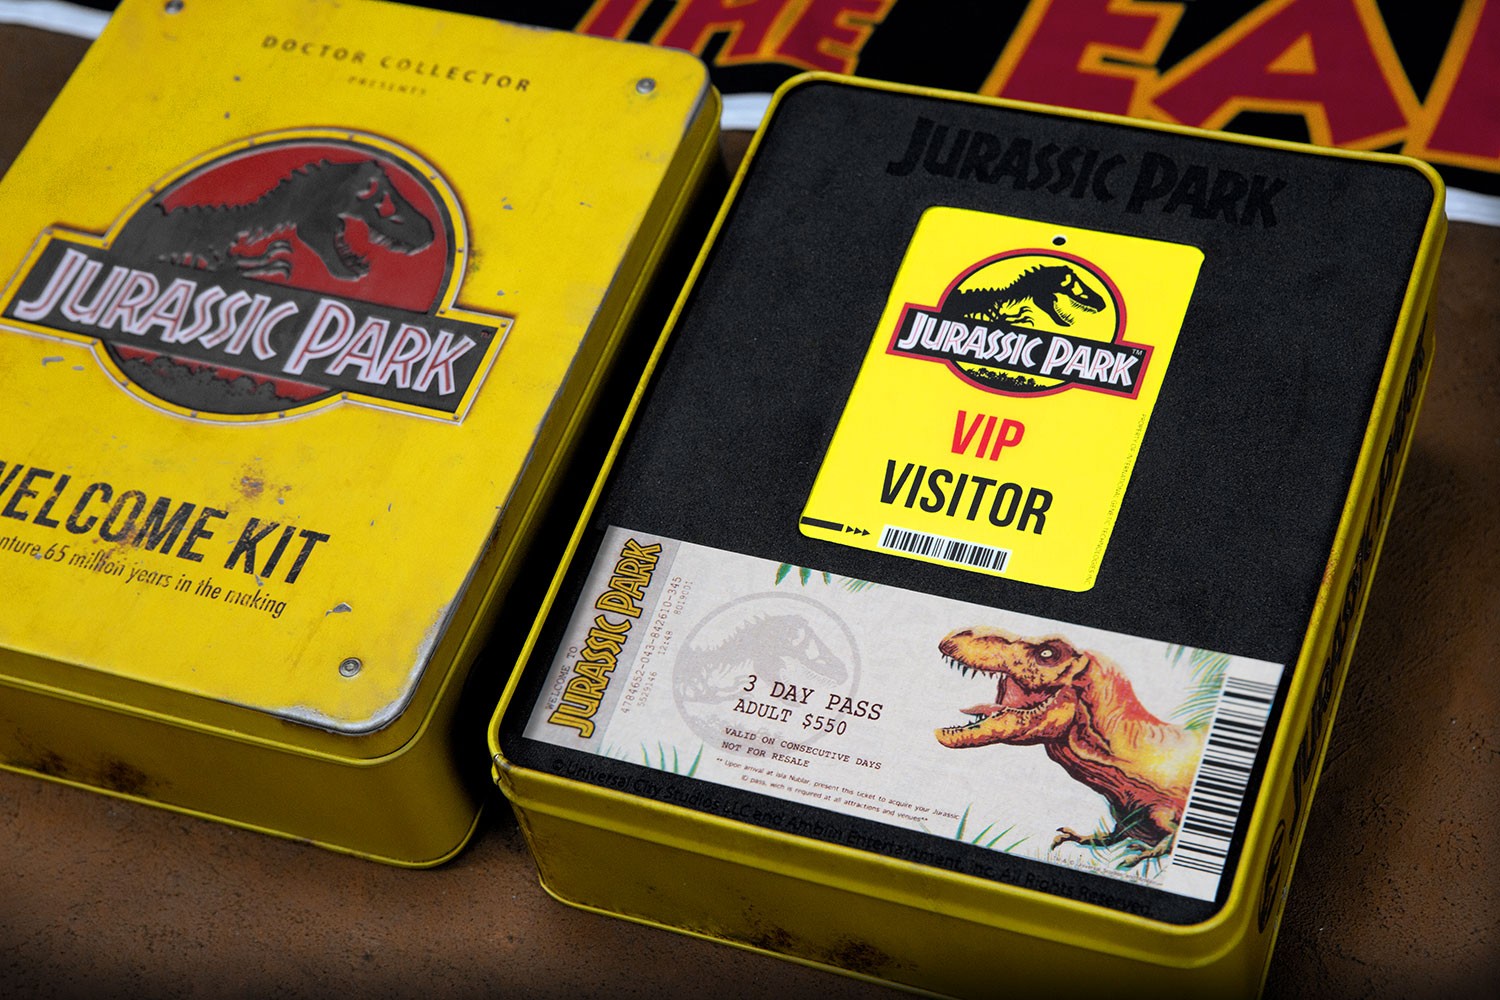 Jurassic Park Welcome Kit (Standard Edition)